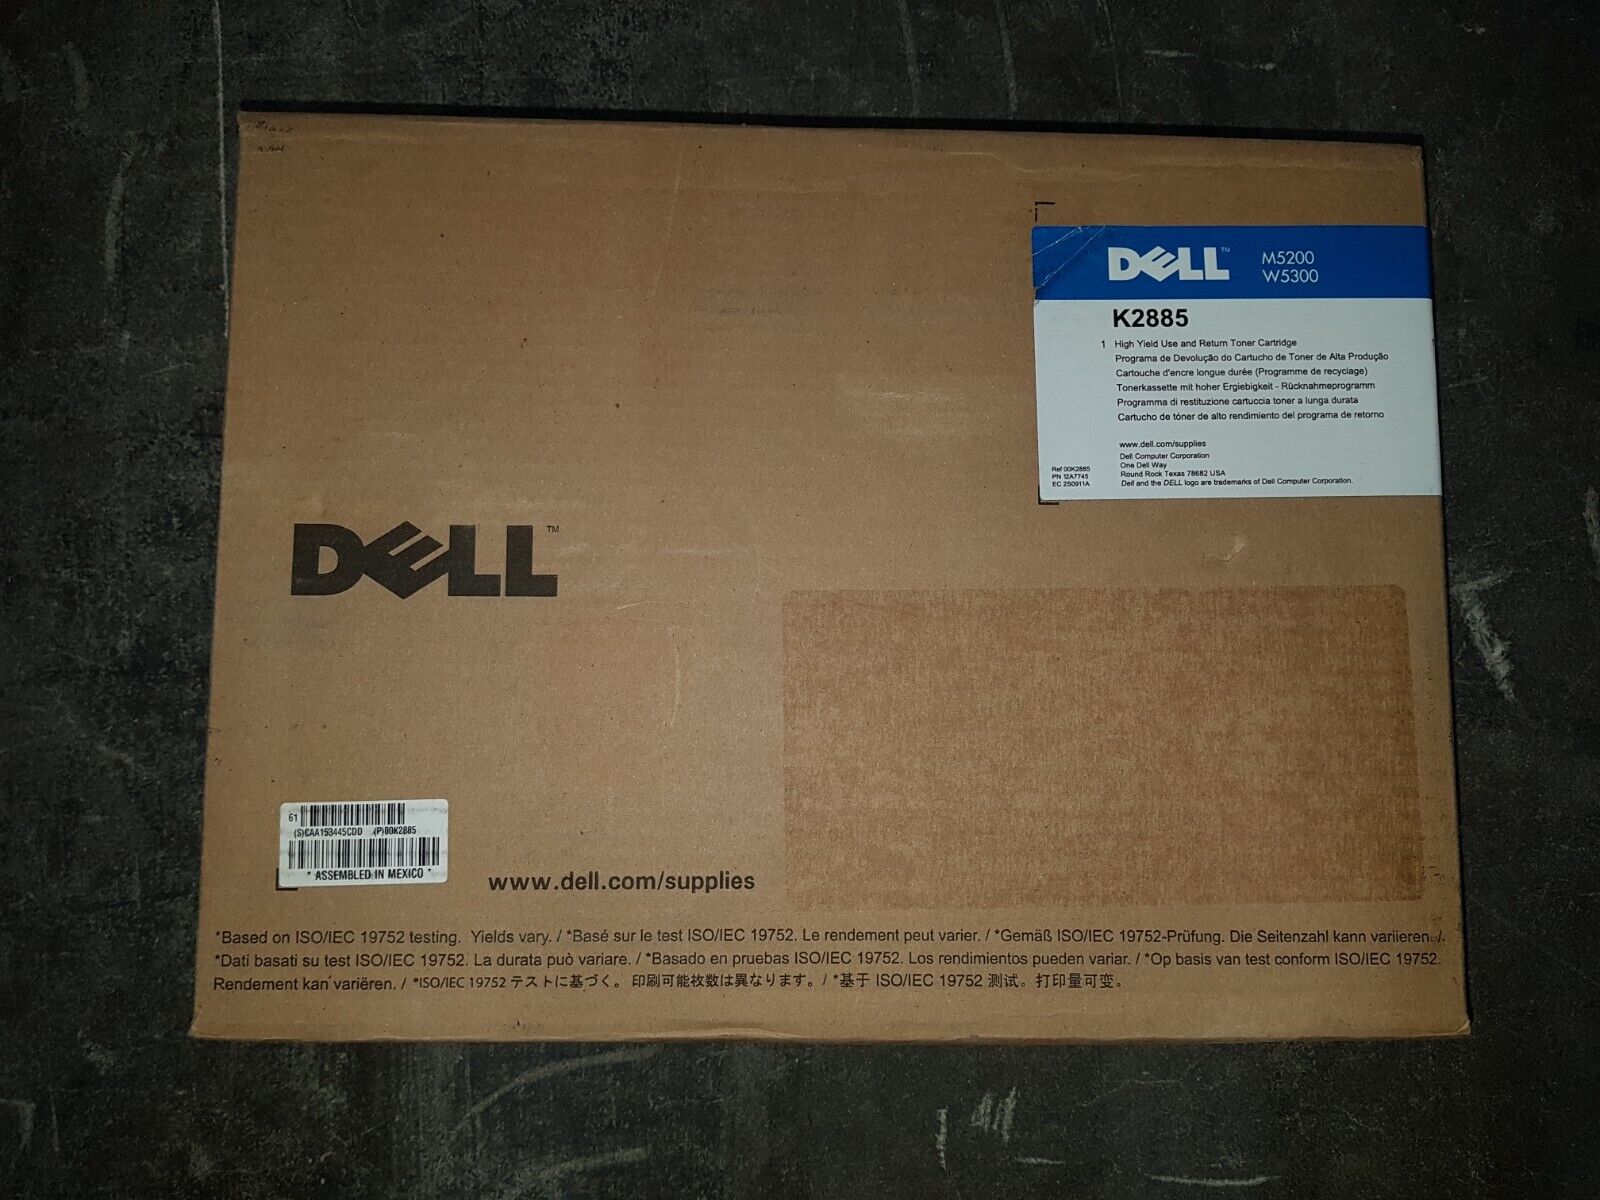 Genuine Dell K2885 Black Toner Cartridge M5200 W5300 BNIB